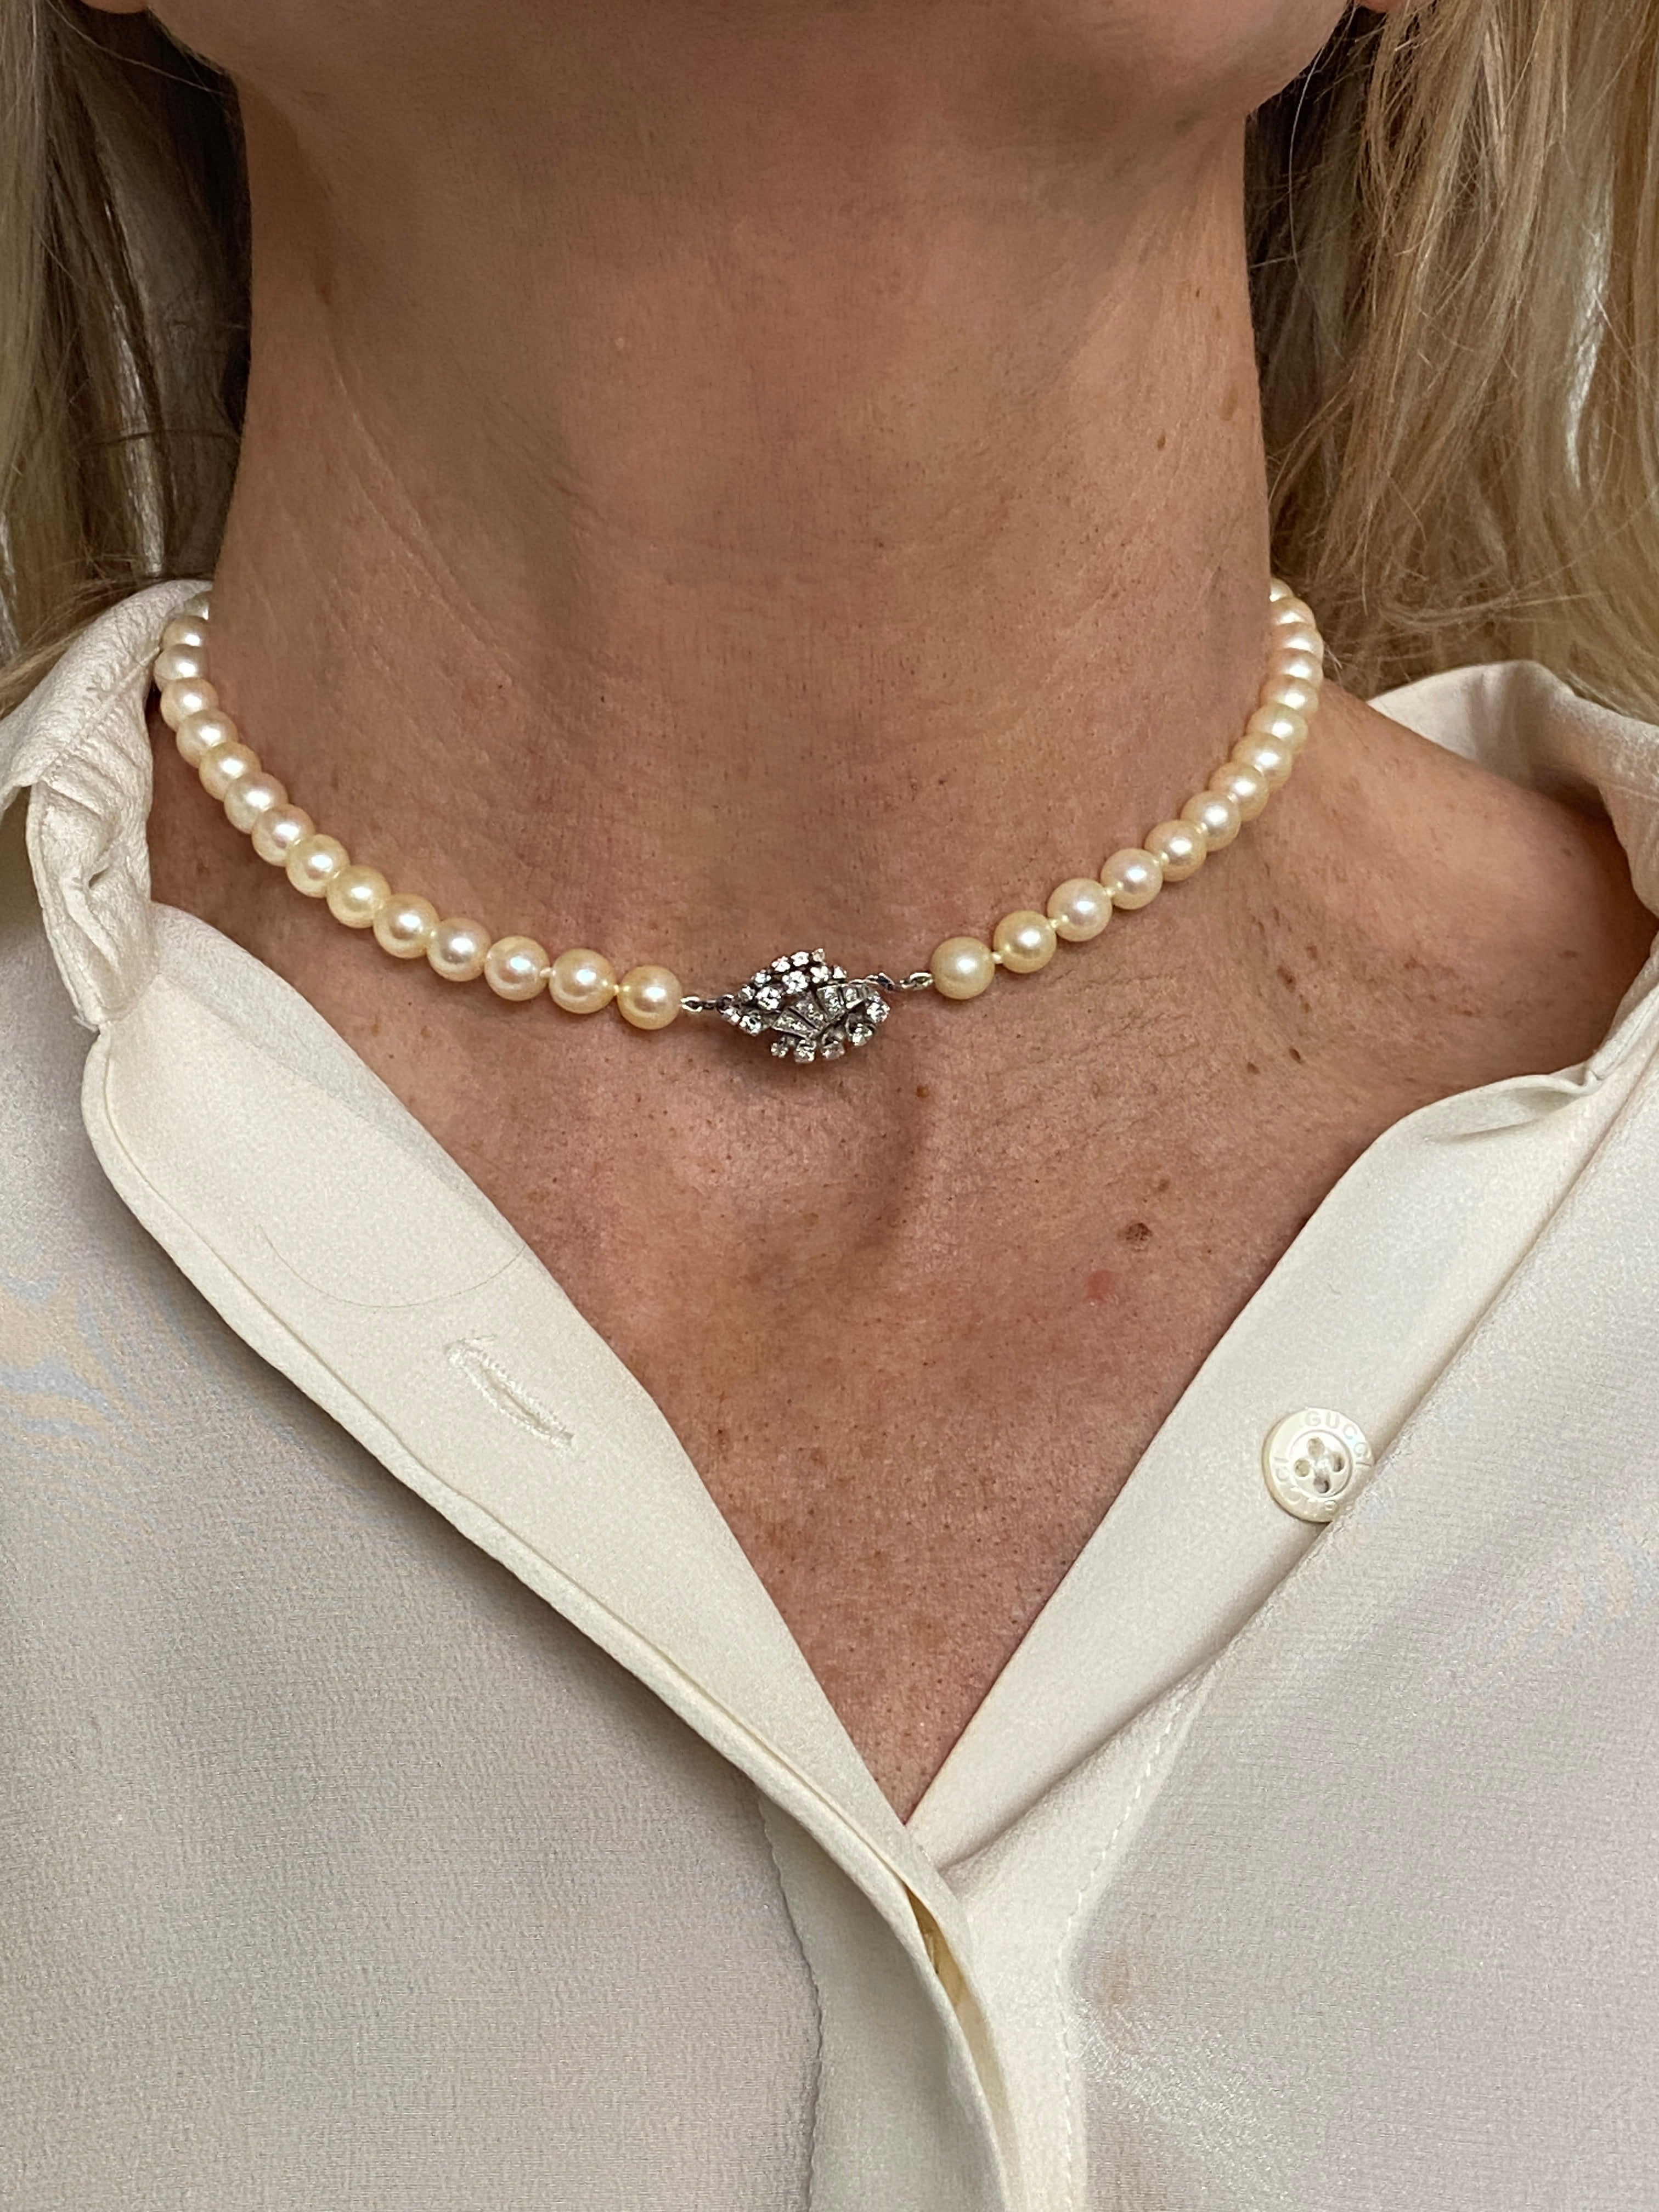 Pearl necklace with multi-stone diamond clasp